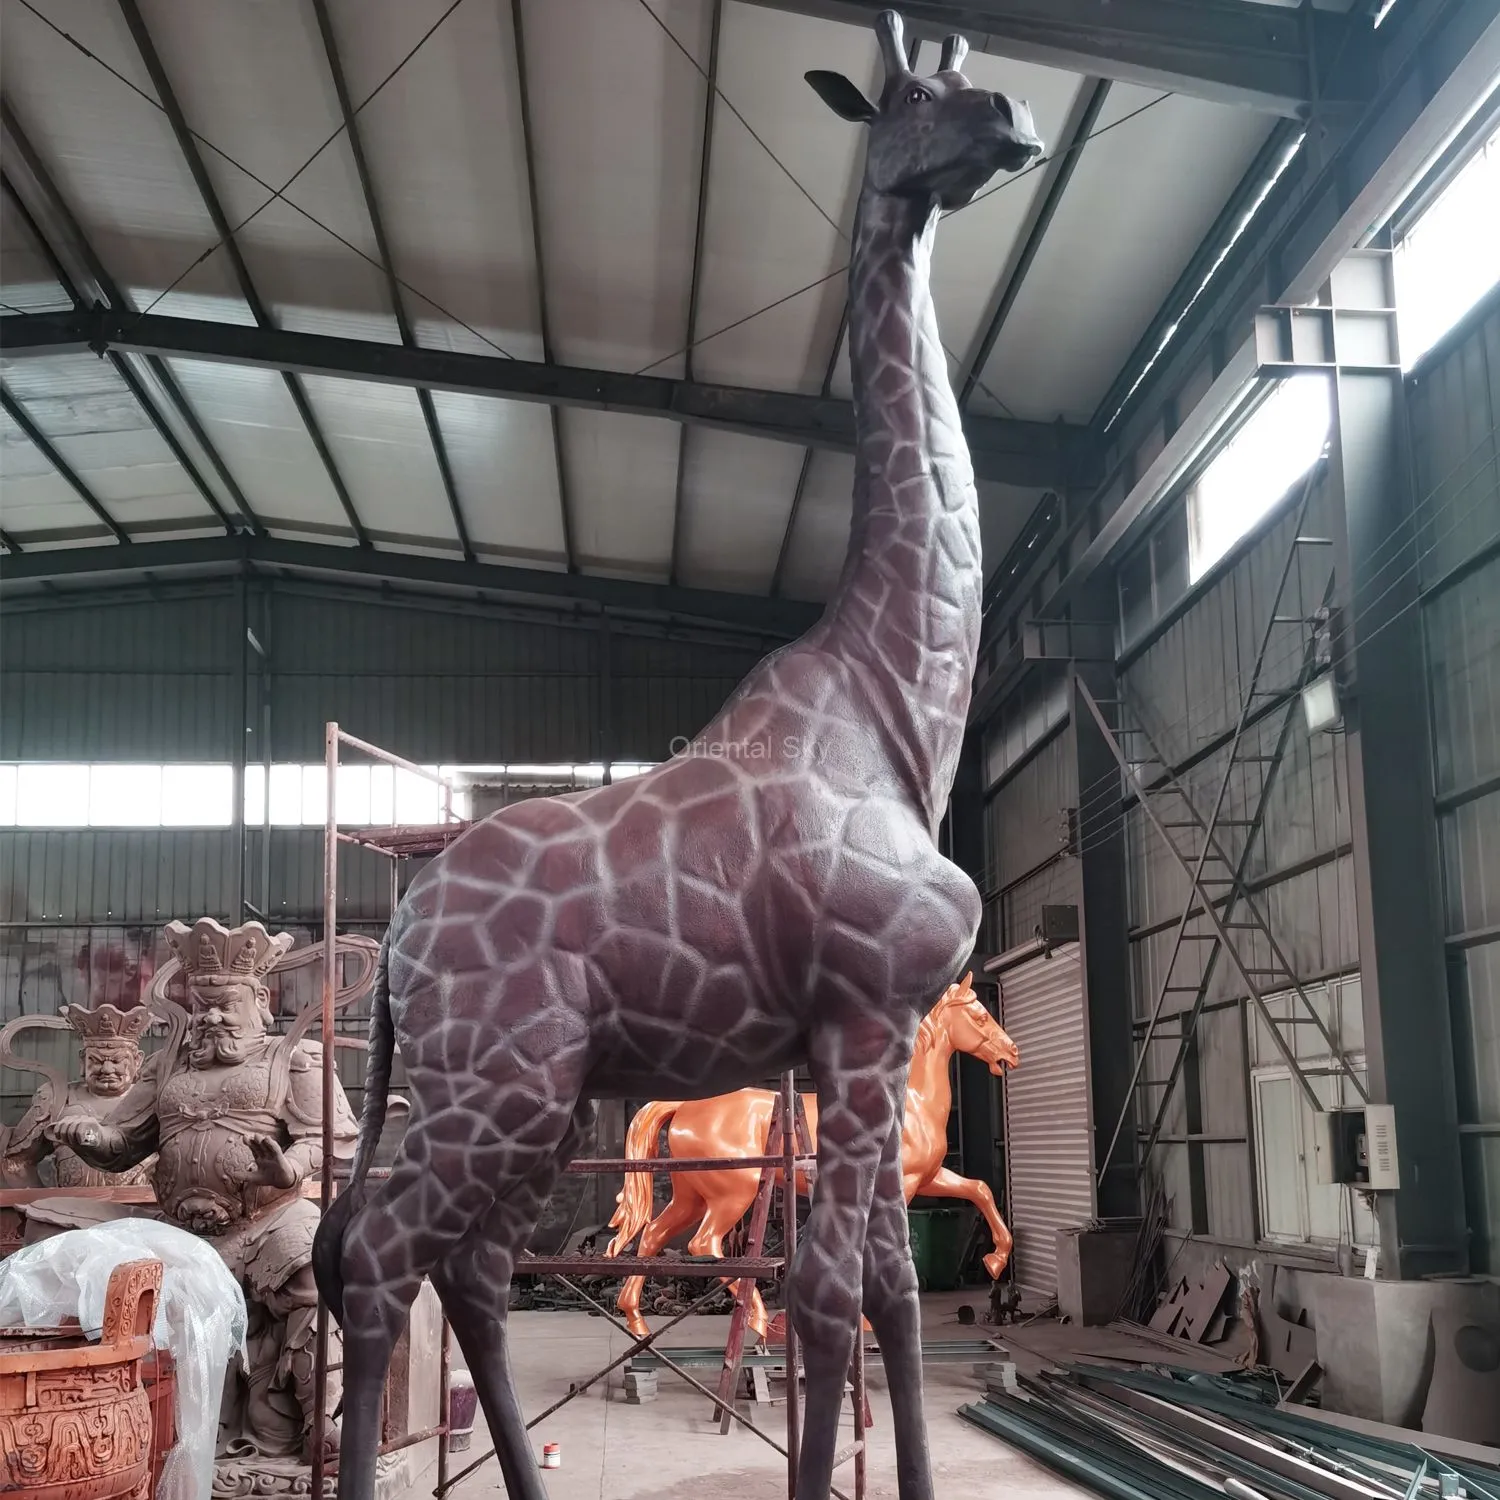 Pair of Life Size Bronze Giraffe Statue Metal Animal Sculpture